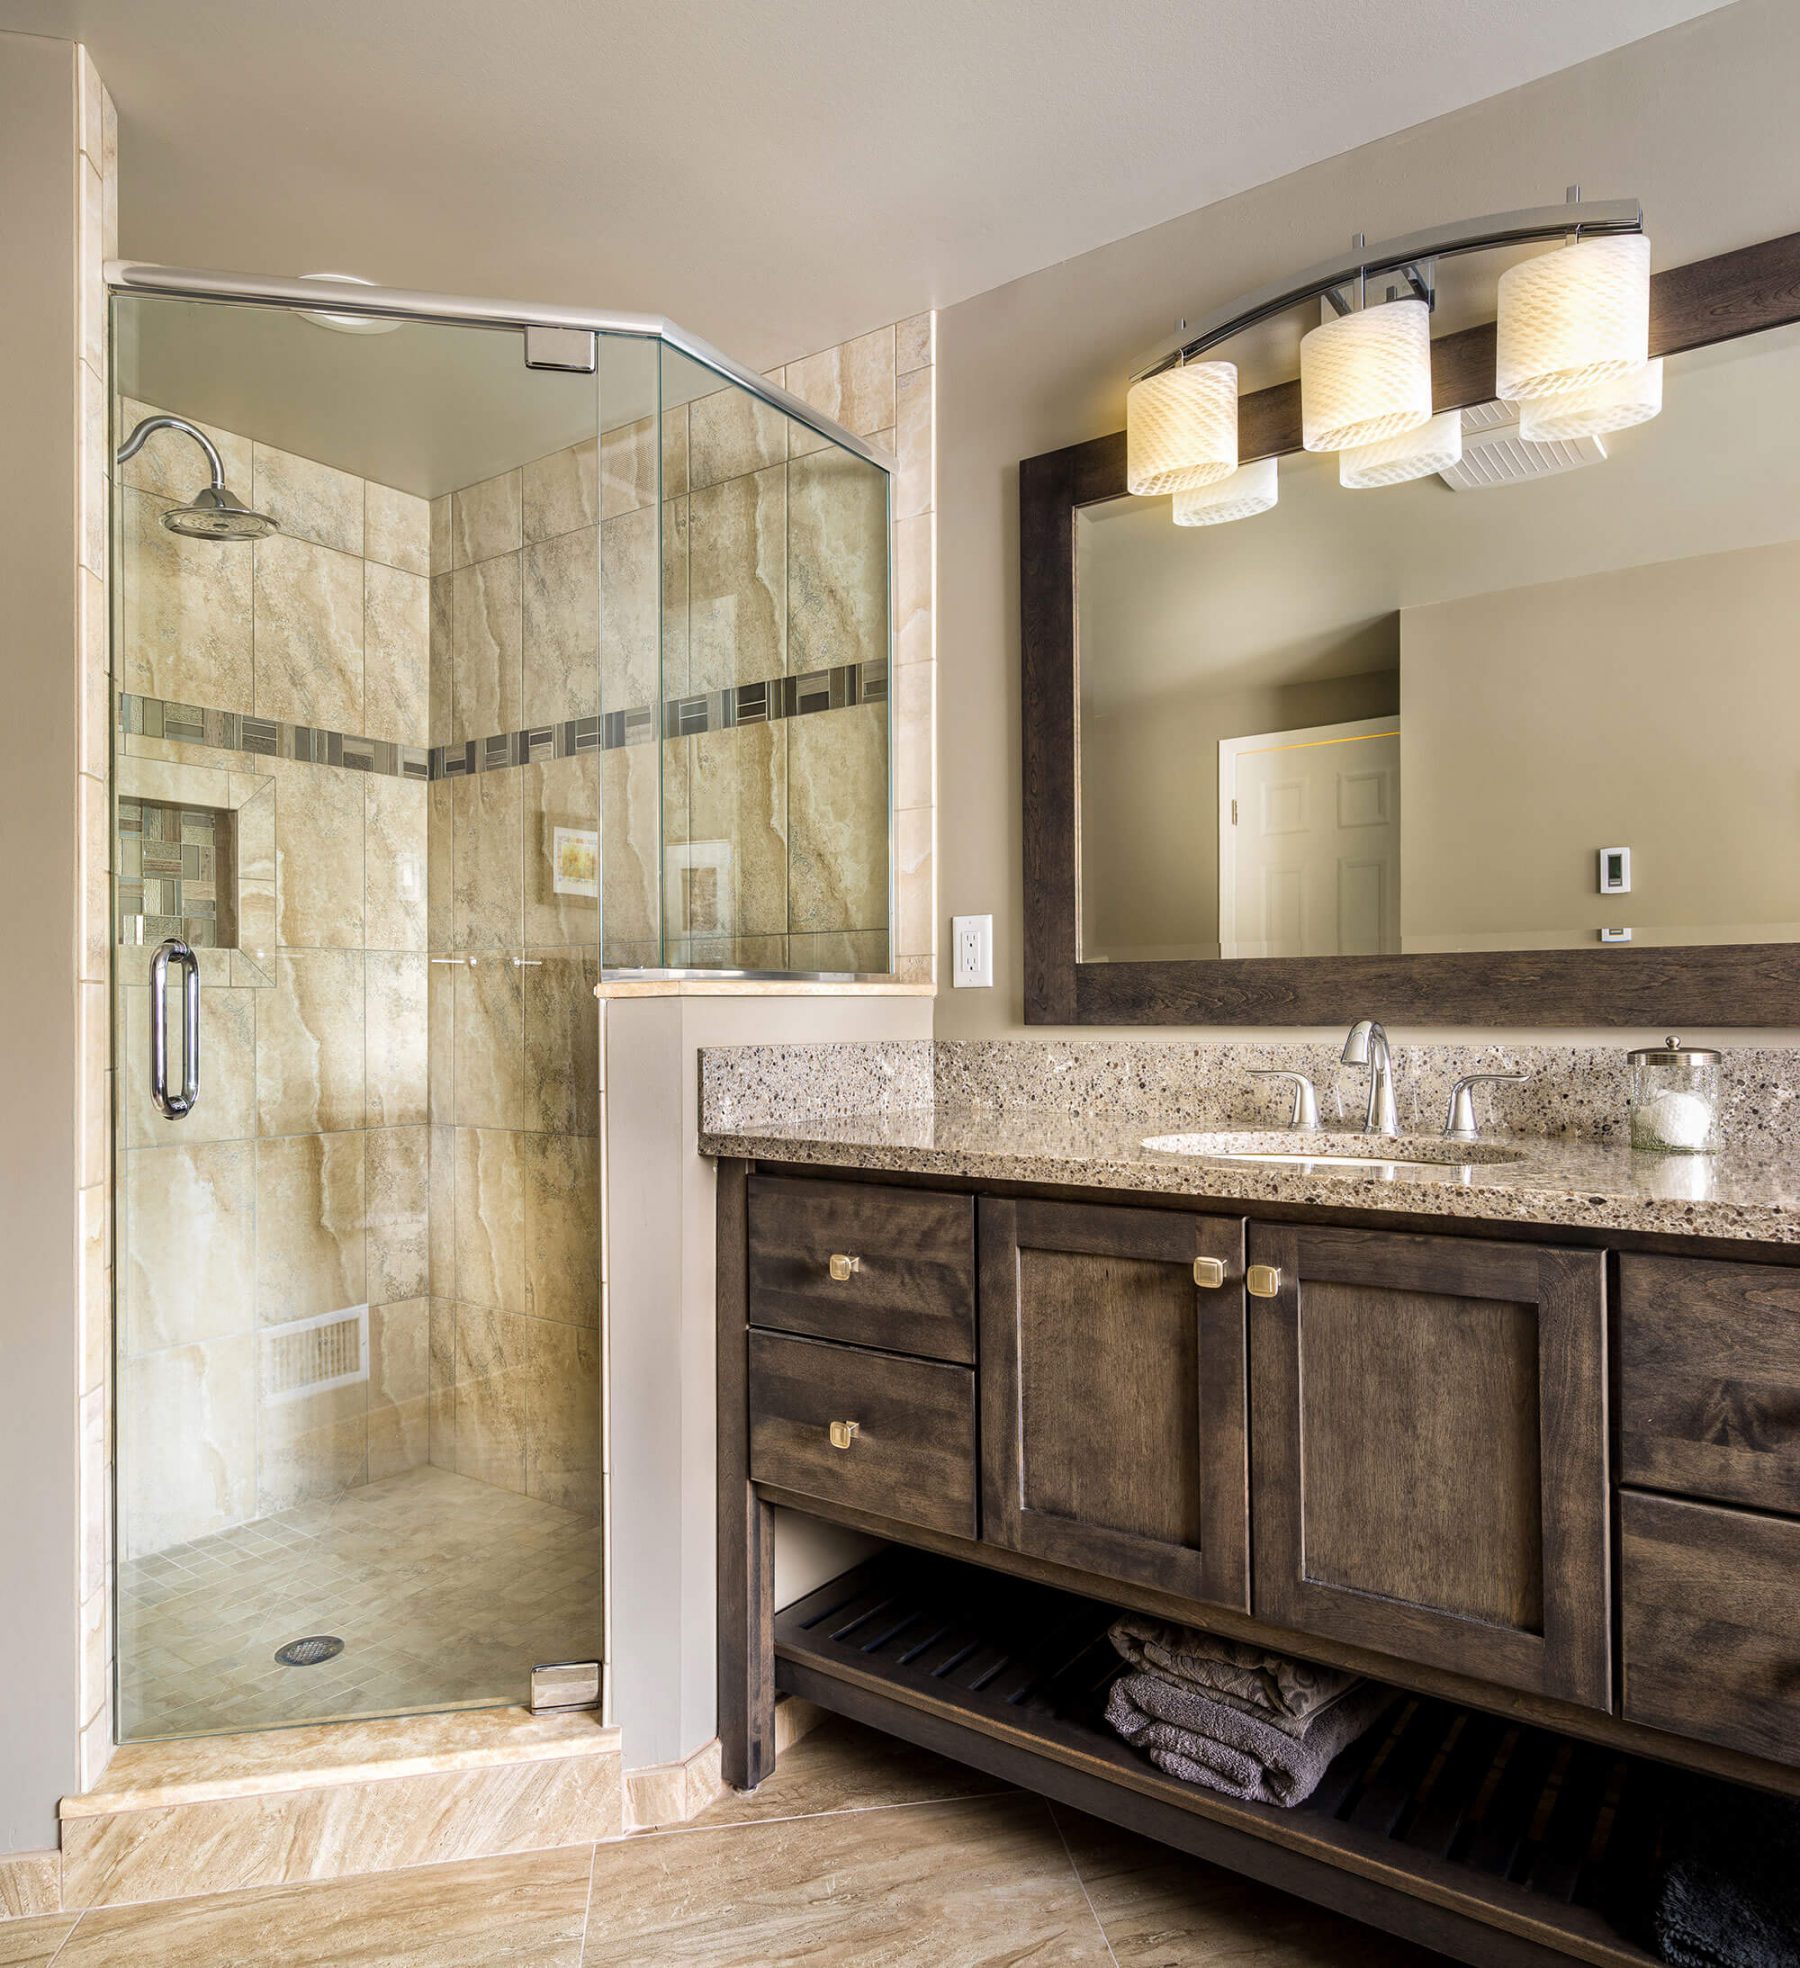 Bathroom Remodeling Lincorp Borchert,Furnishing A New Home Checklist Pdf